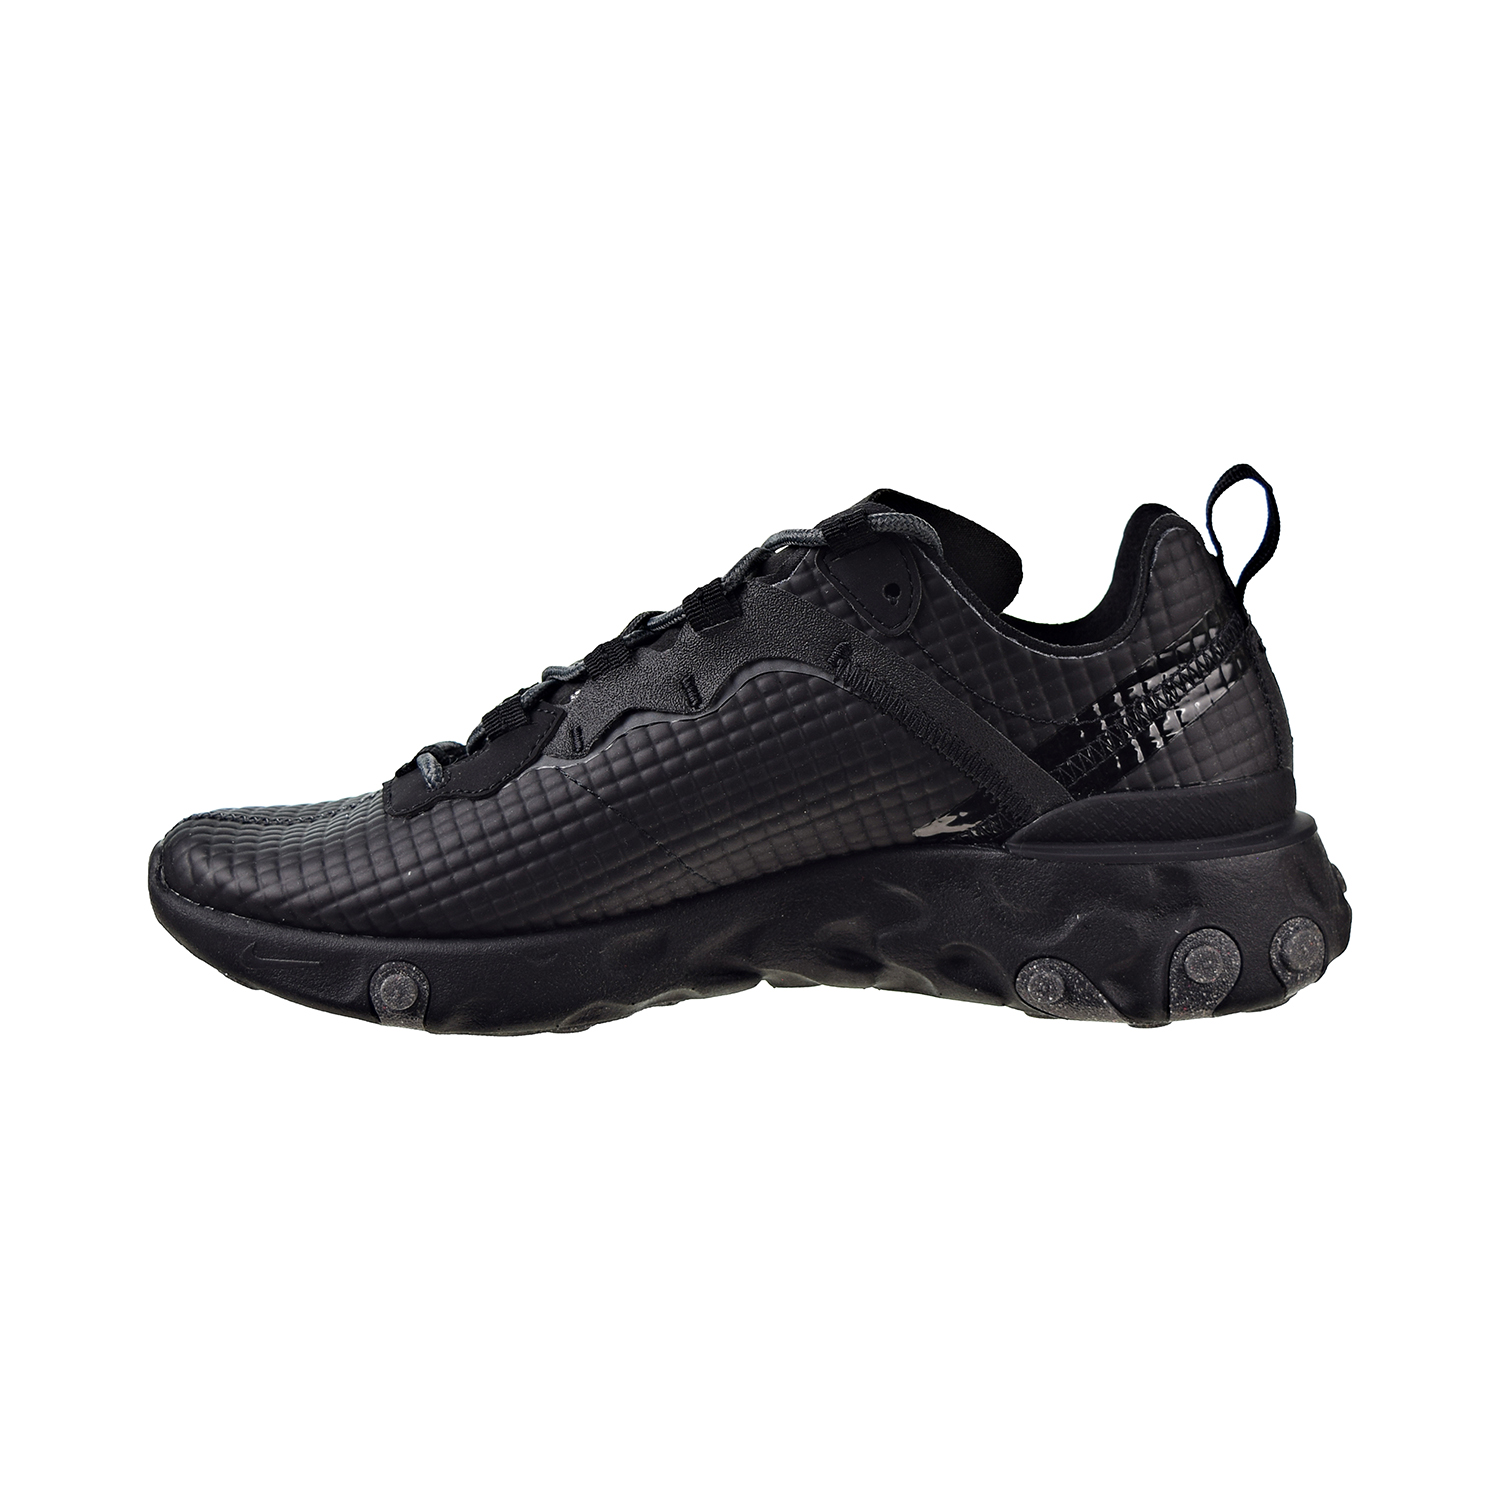 Nike React Element 55 PRM Men's Shoes Black-Dark Grey-Anthracite ci3835-002 - image 4 of 6